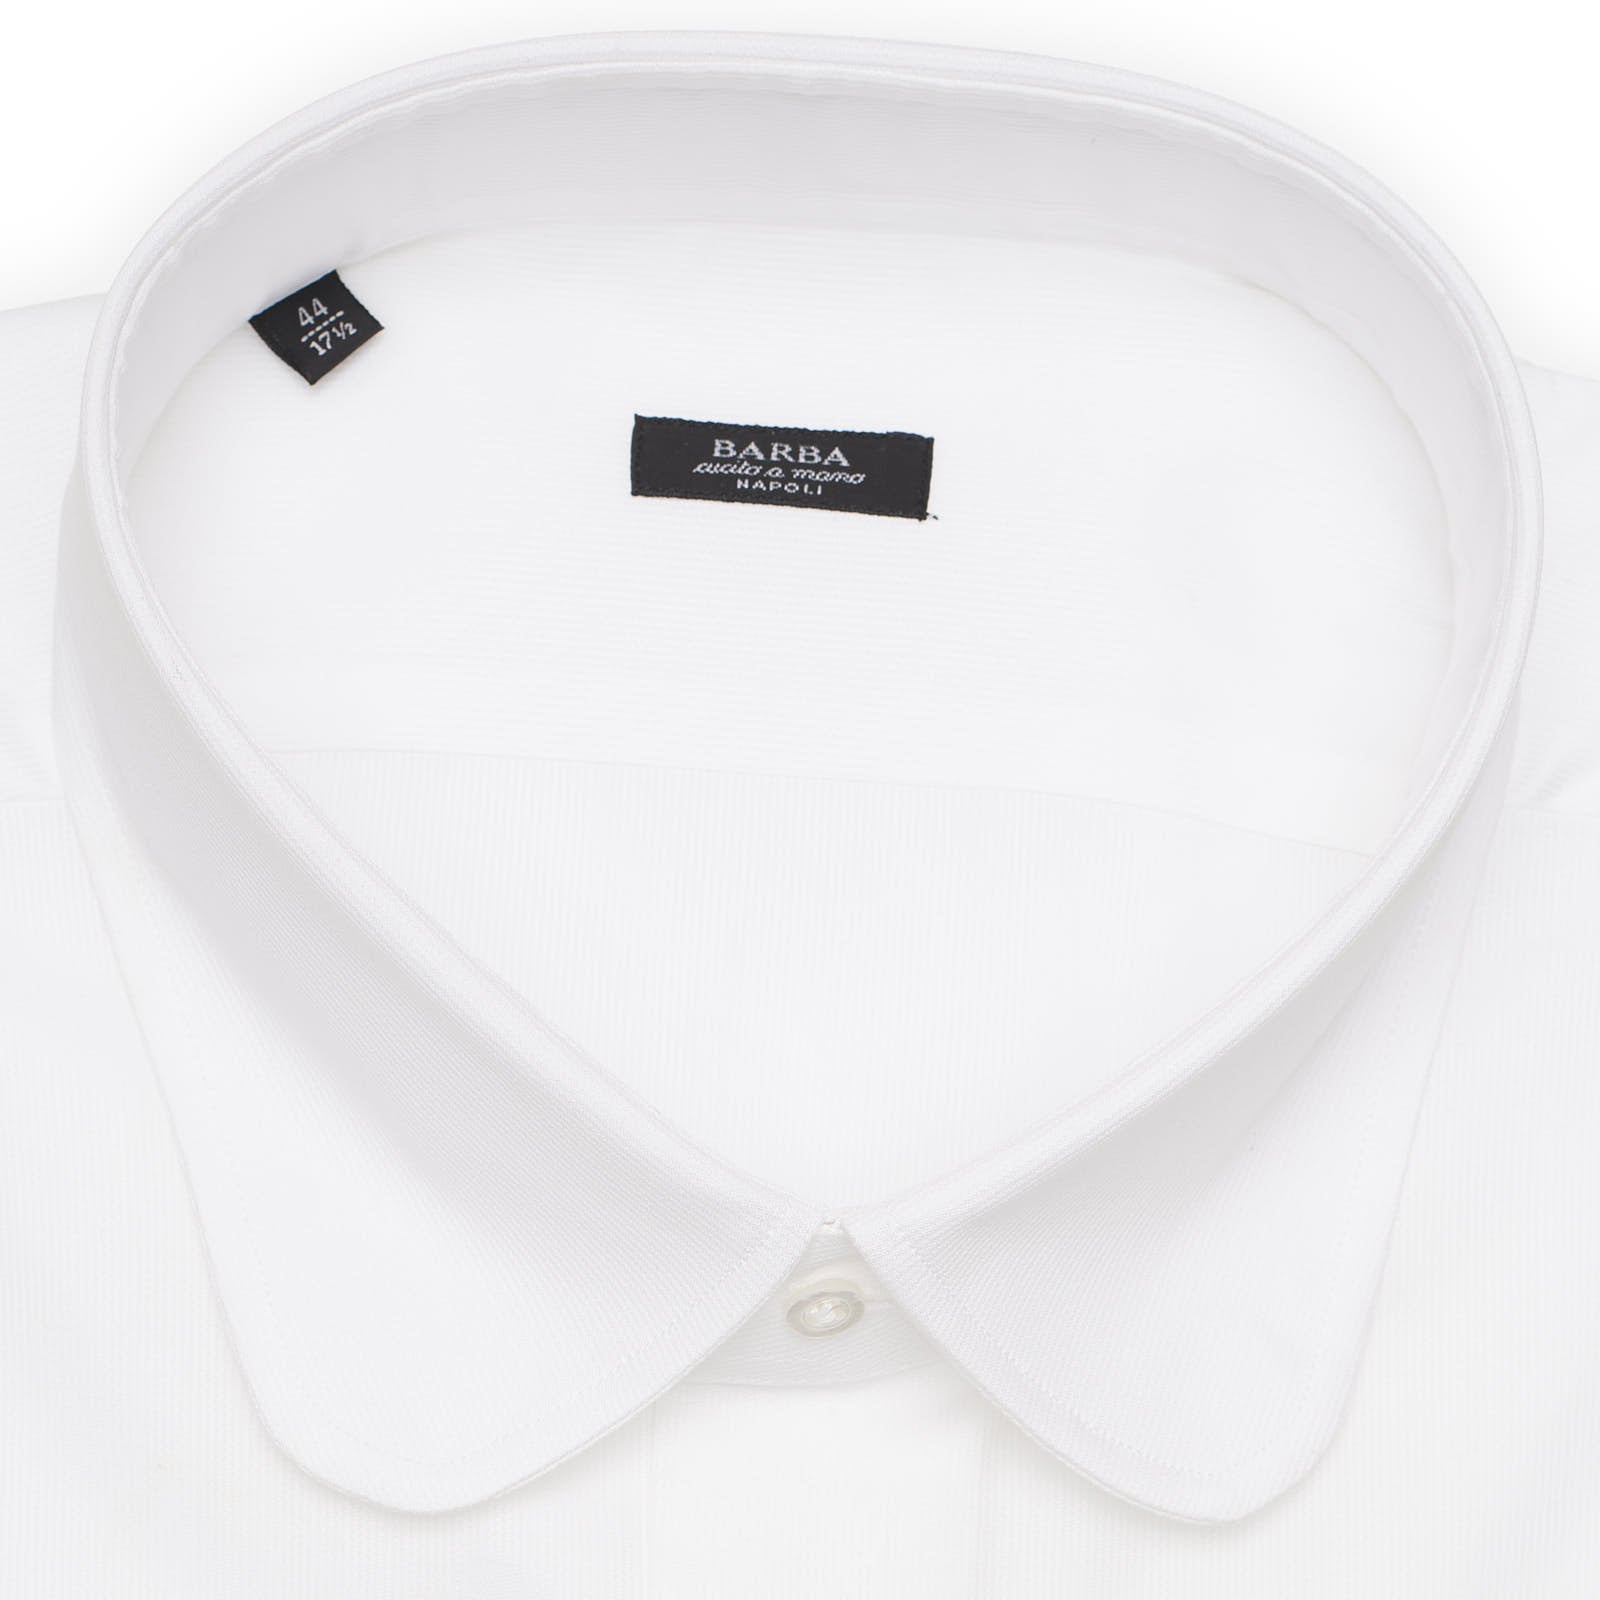 BARBA Napoli Handmade White Cotton Dress Shirt EU 44 NEW US 17.5 Club Collar